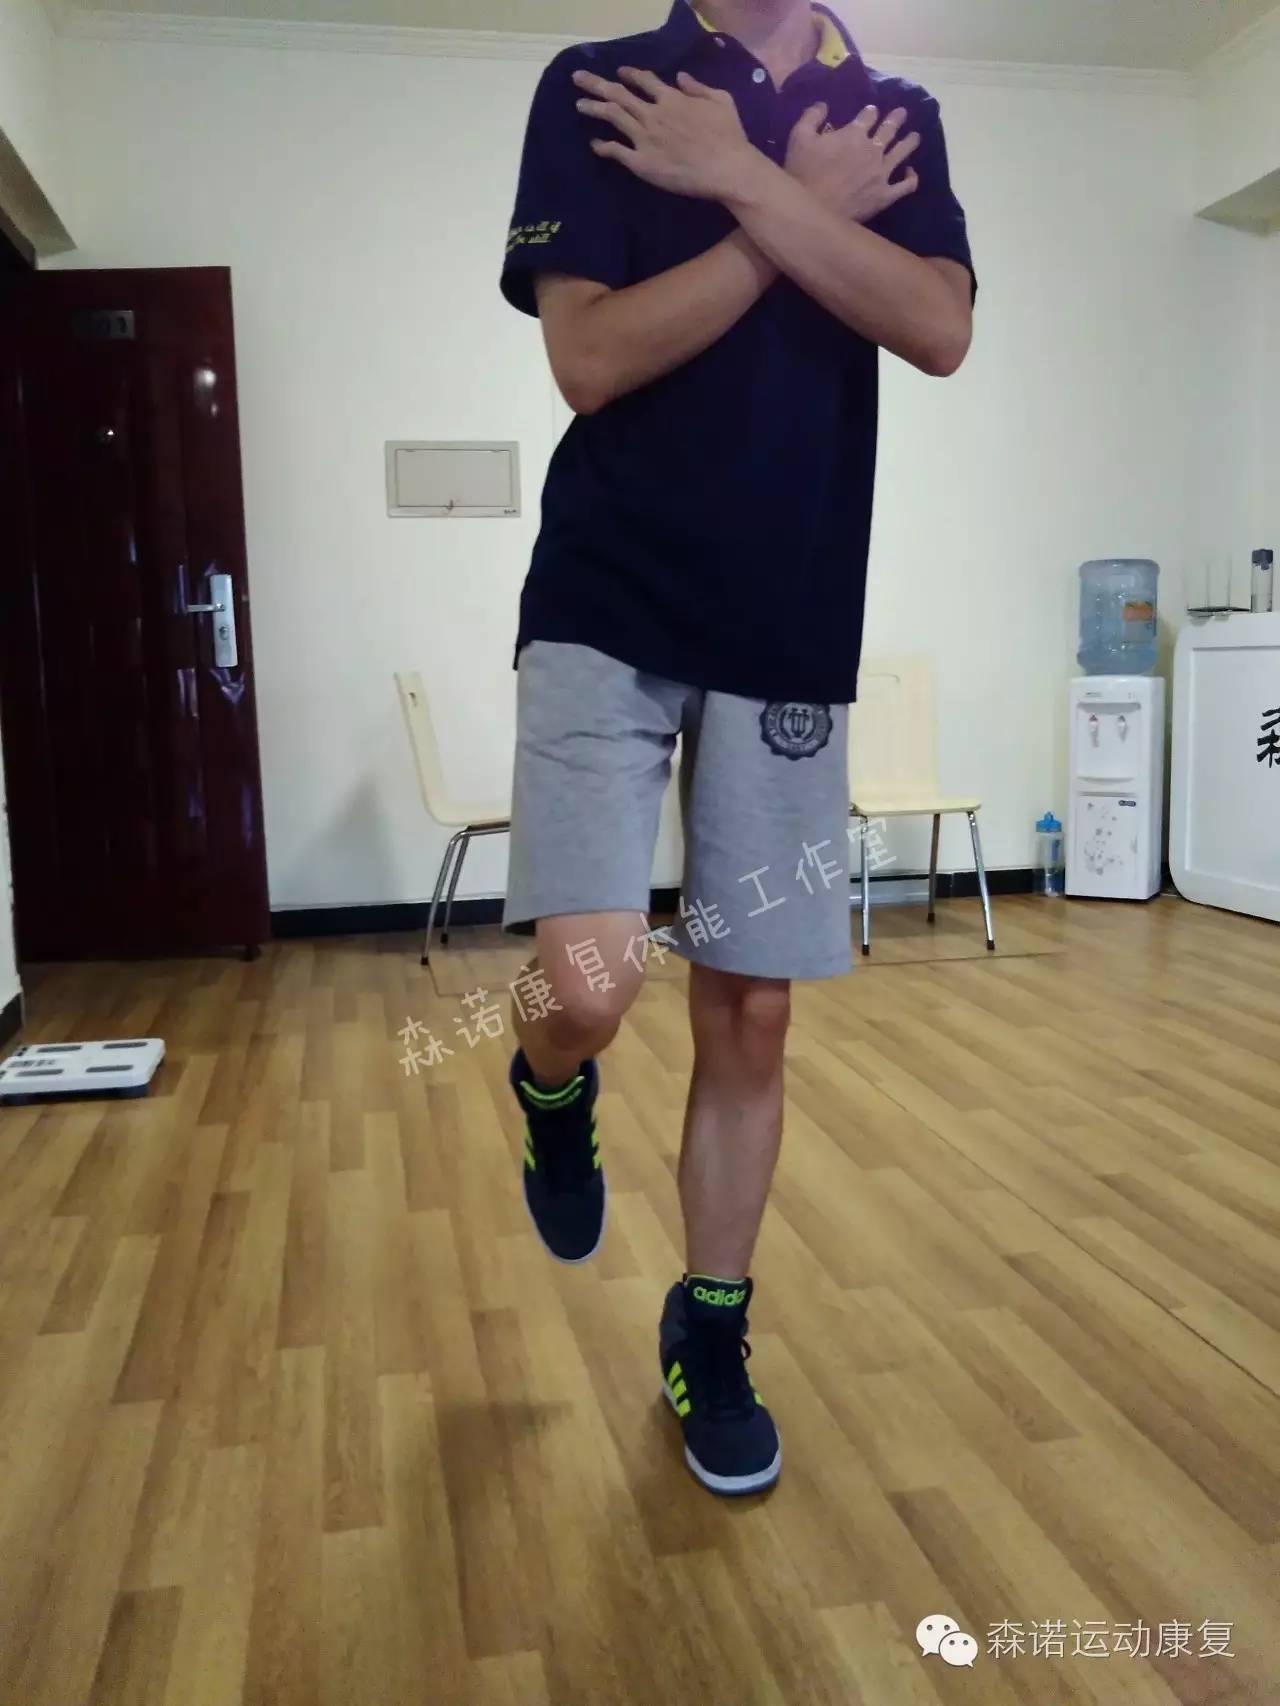 BionicM（健行仿生）在ISPO国际展会上发布全球最轻最酷的动力式智能假肢 - 知乎